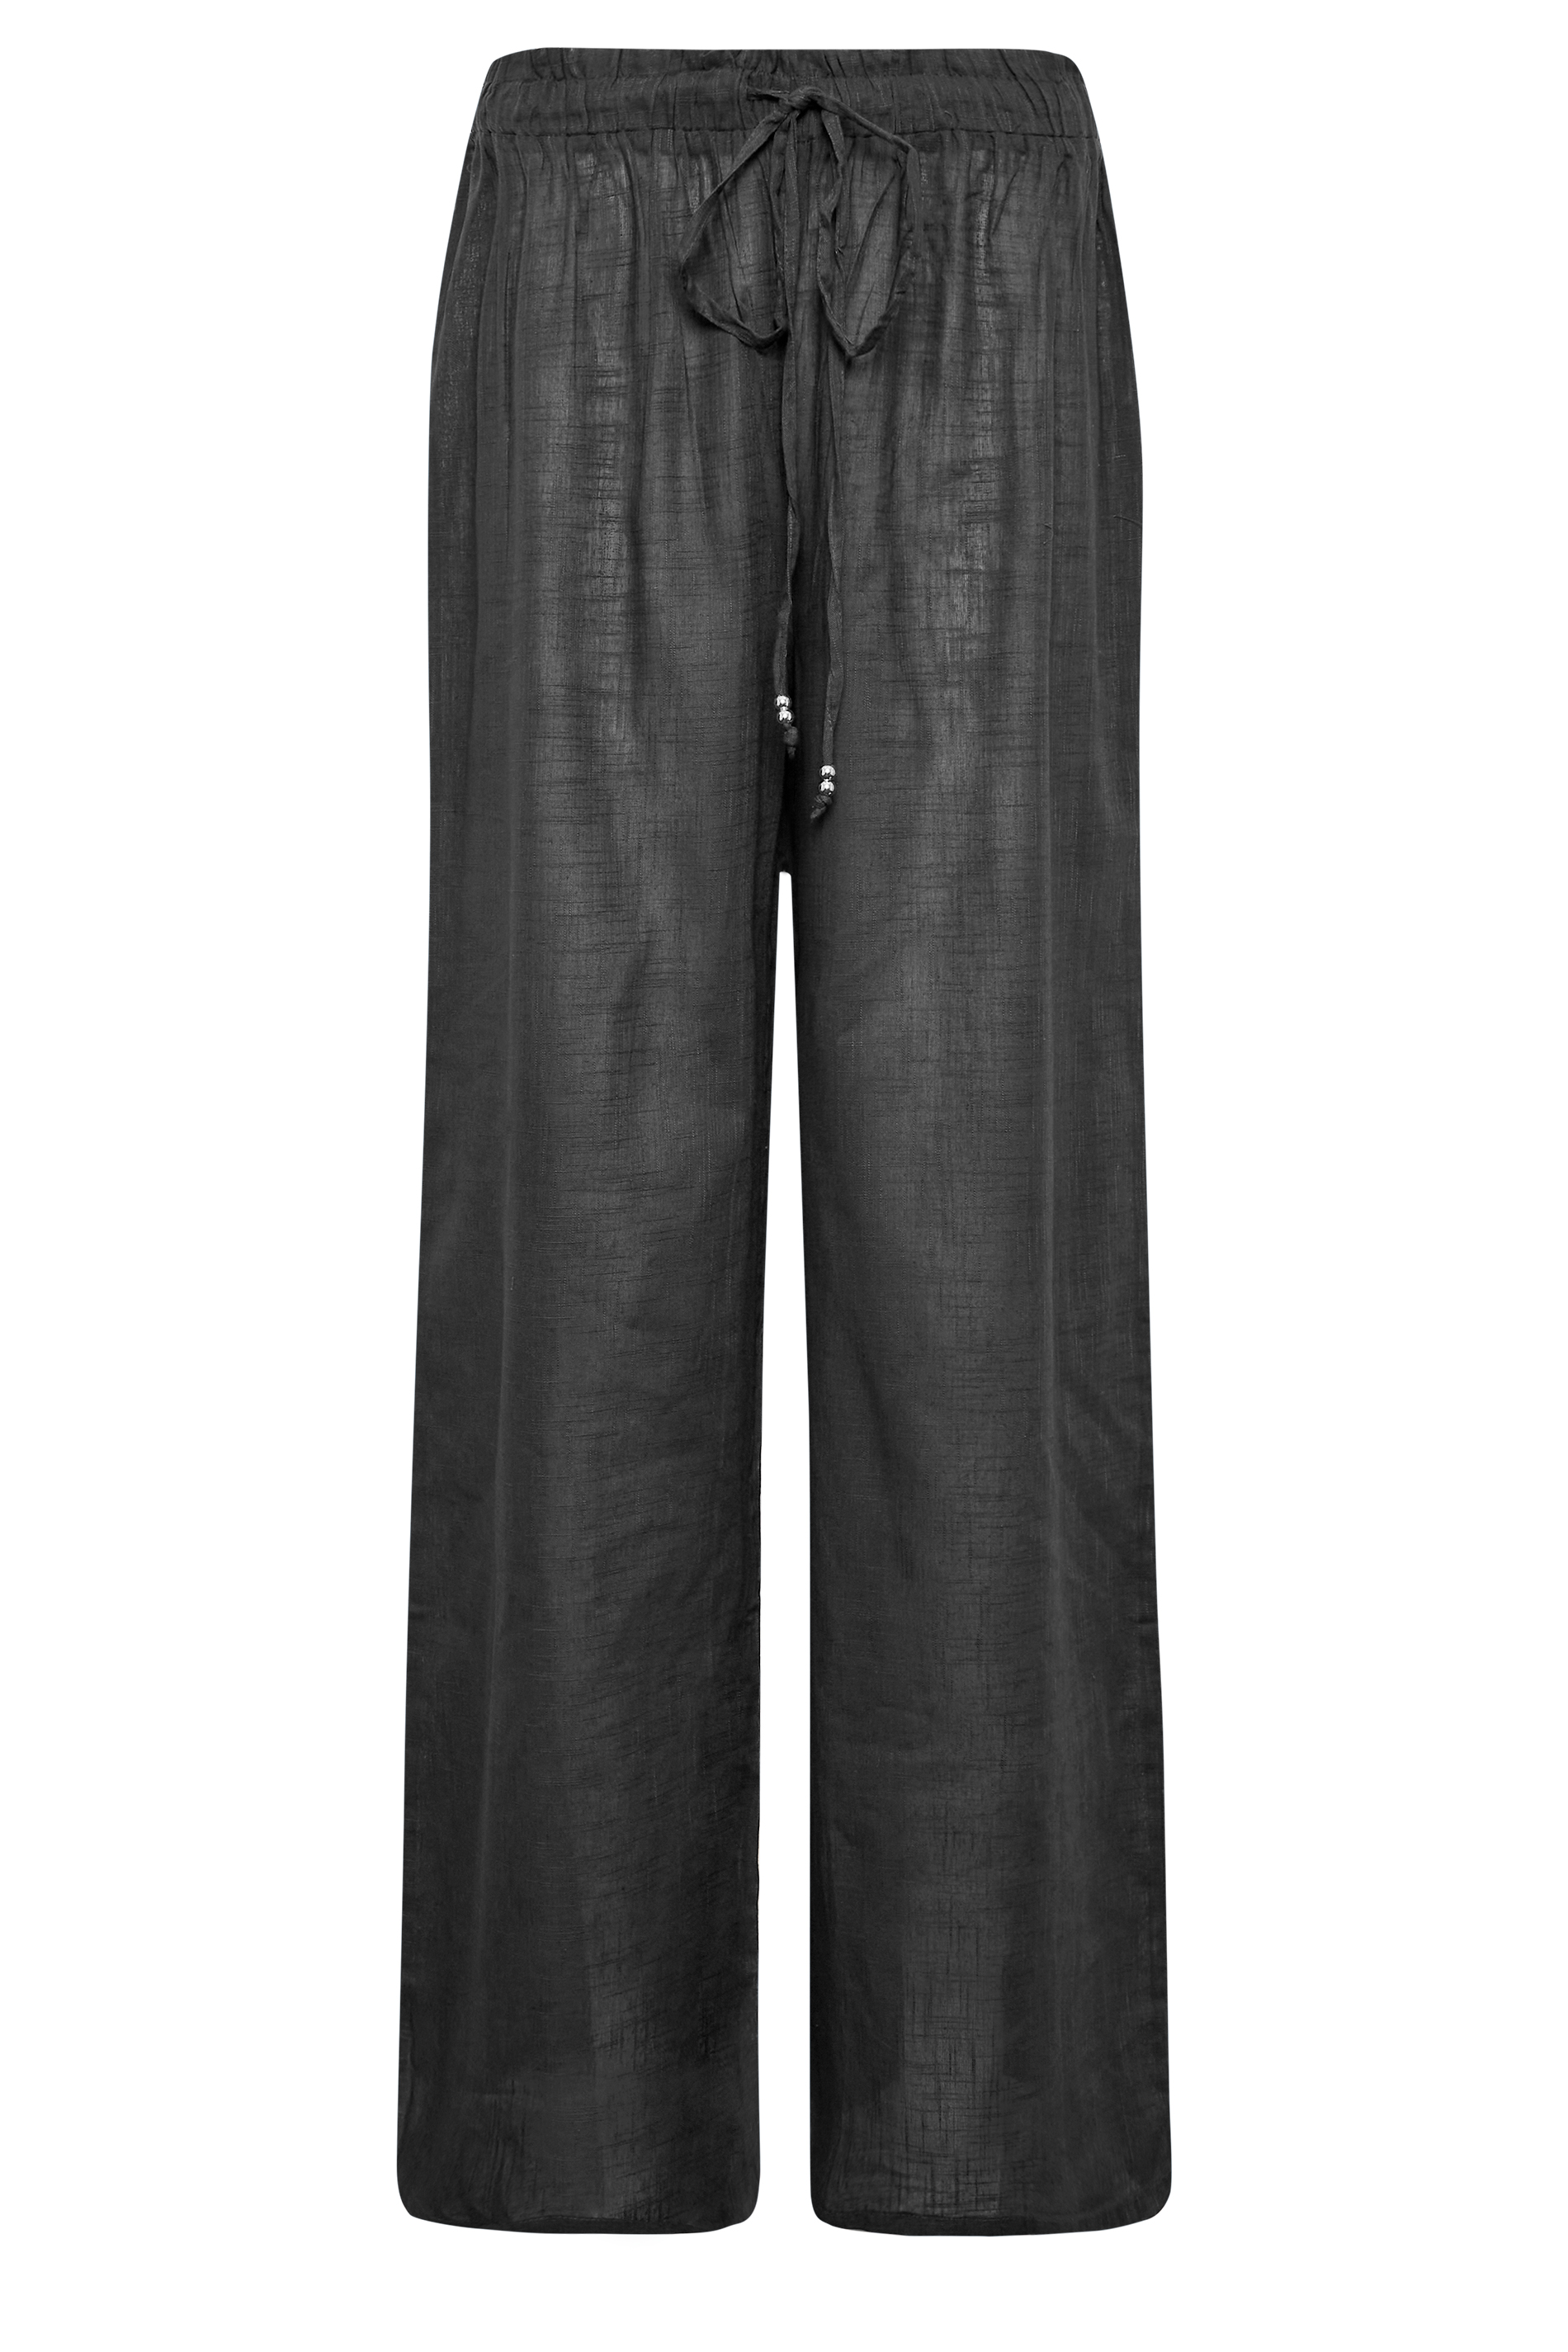 LTS Tall Black Cotton Wide Leg Beach Trousers | Long Tall Sally  3